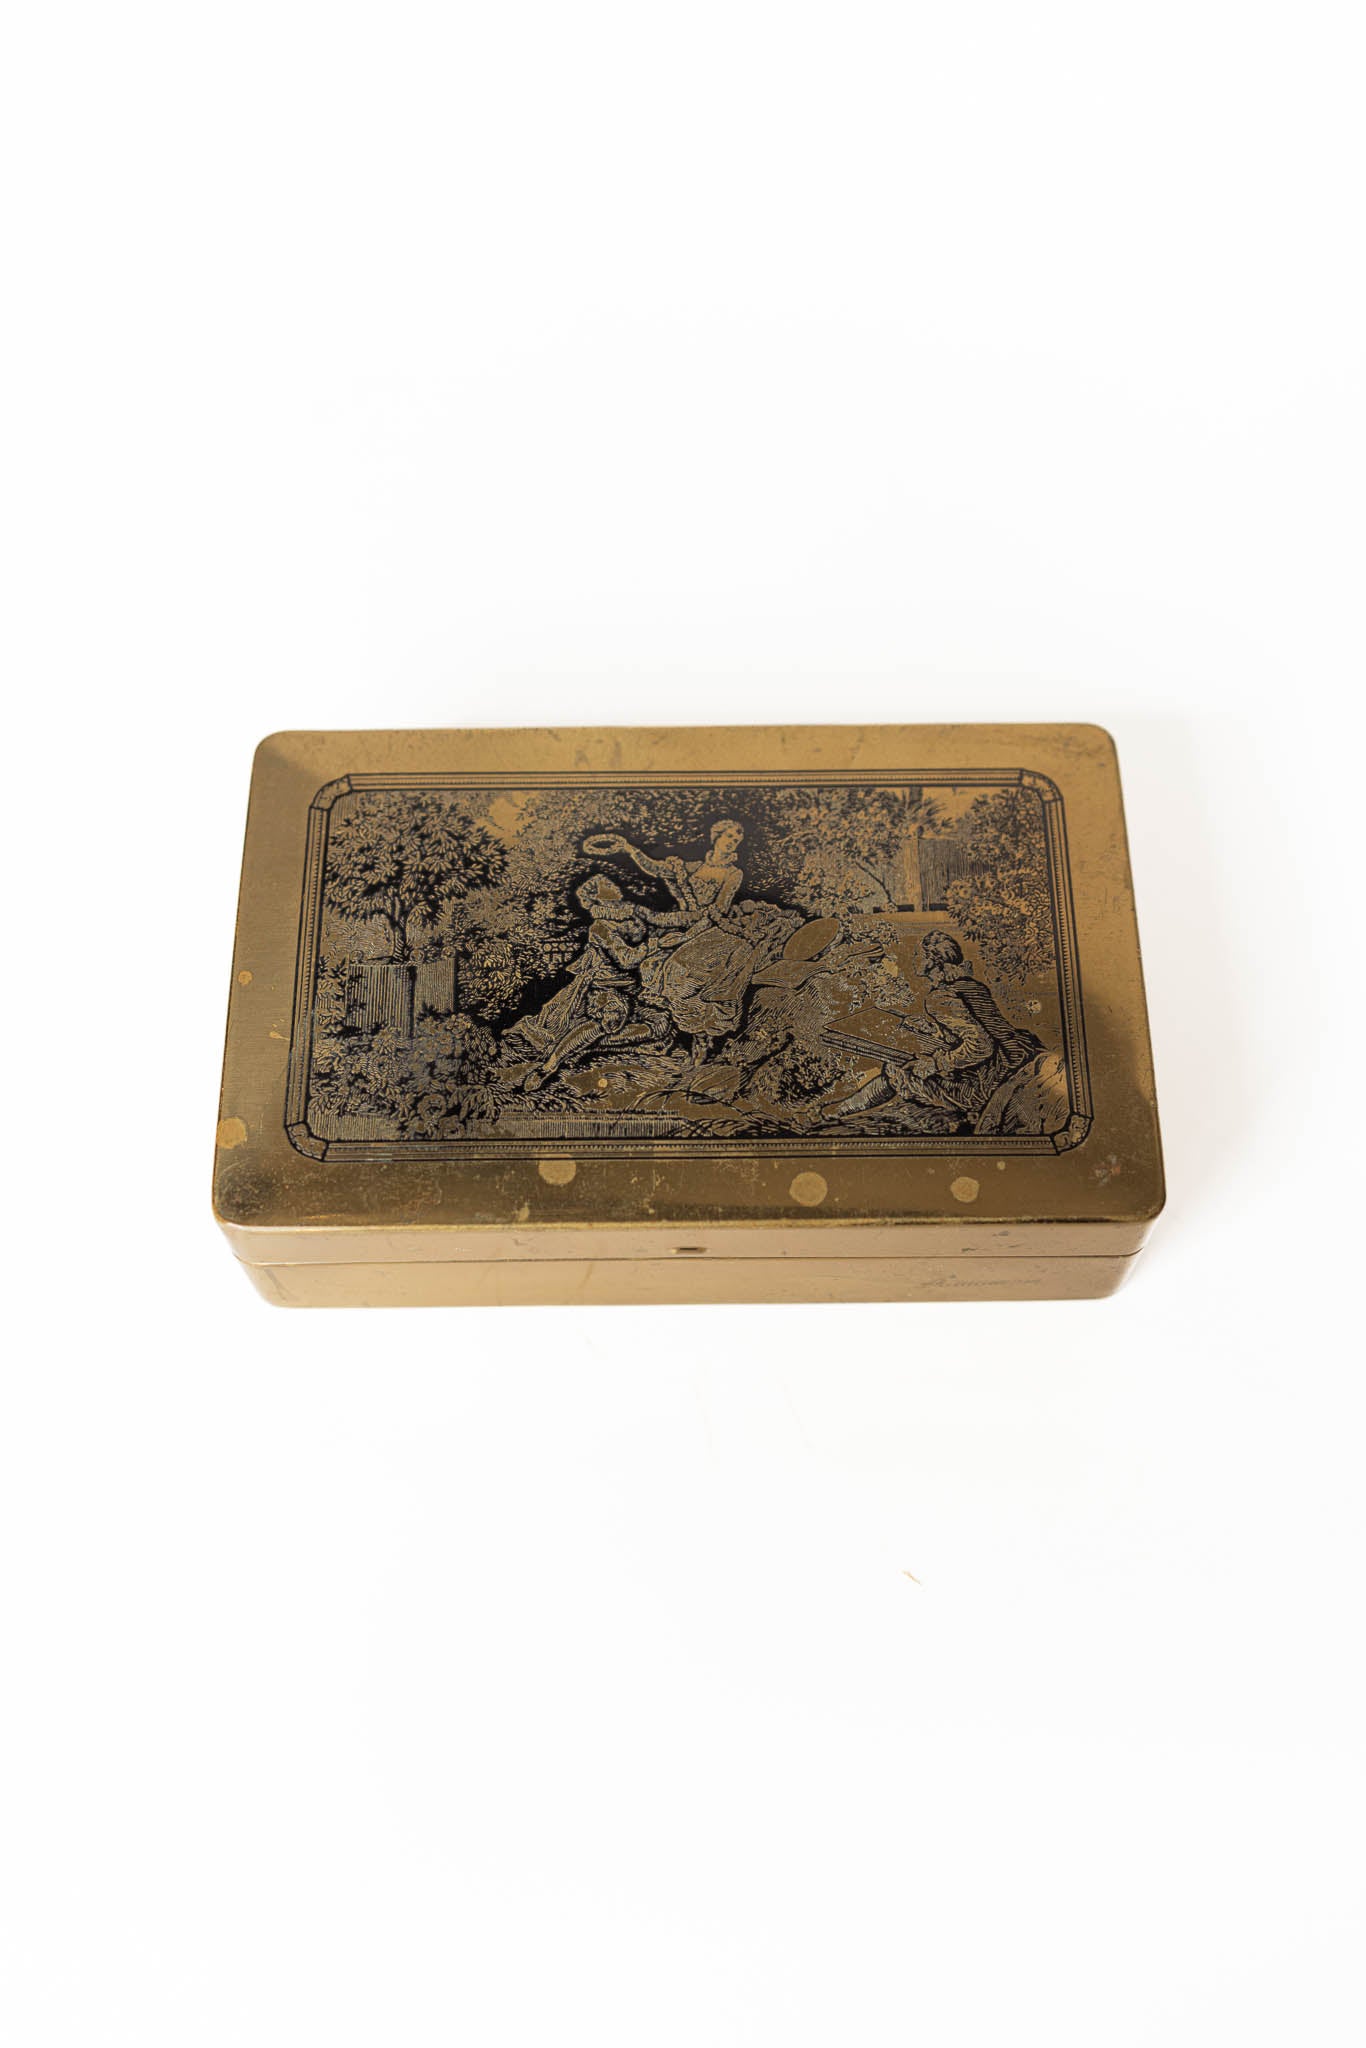 Vintage Etched Brass Chocolate / Keepsake Box